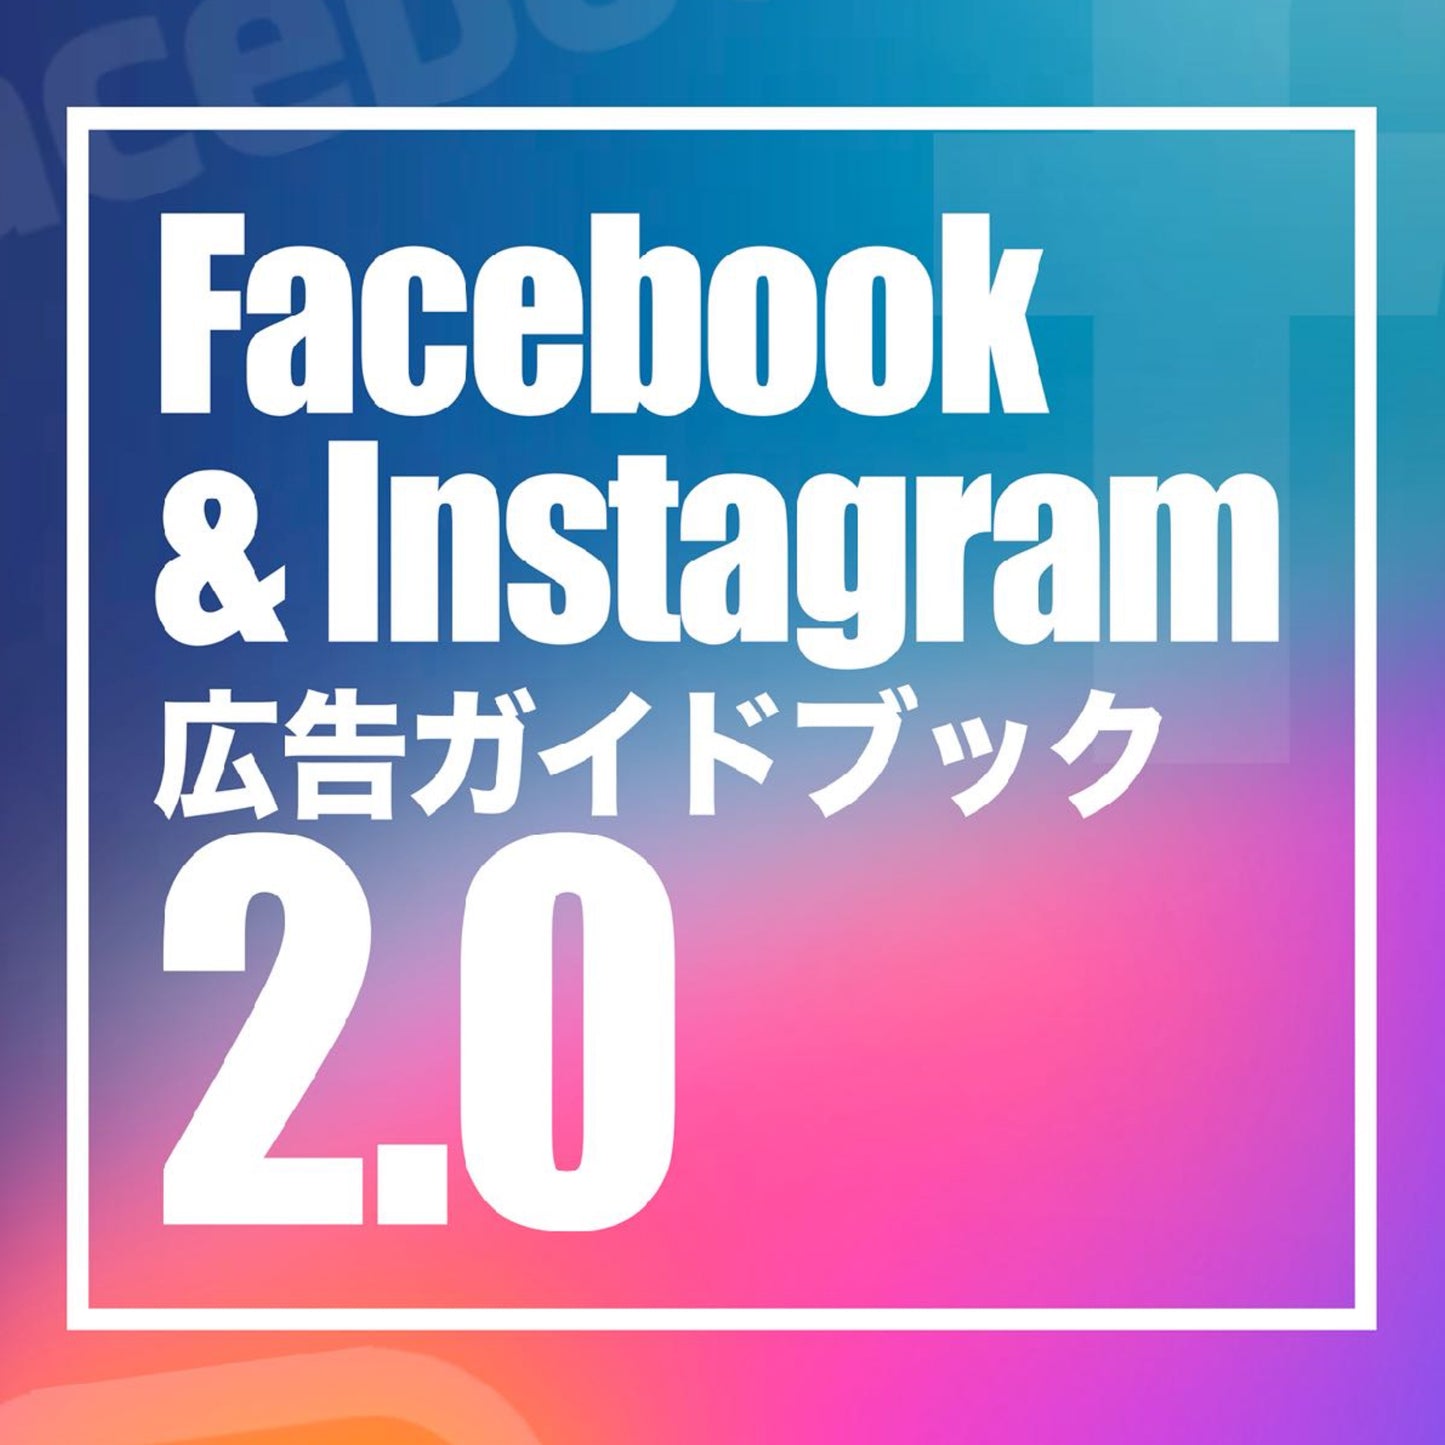 Facebook & Instagram ガイドブック